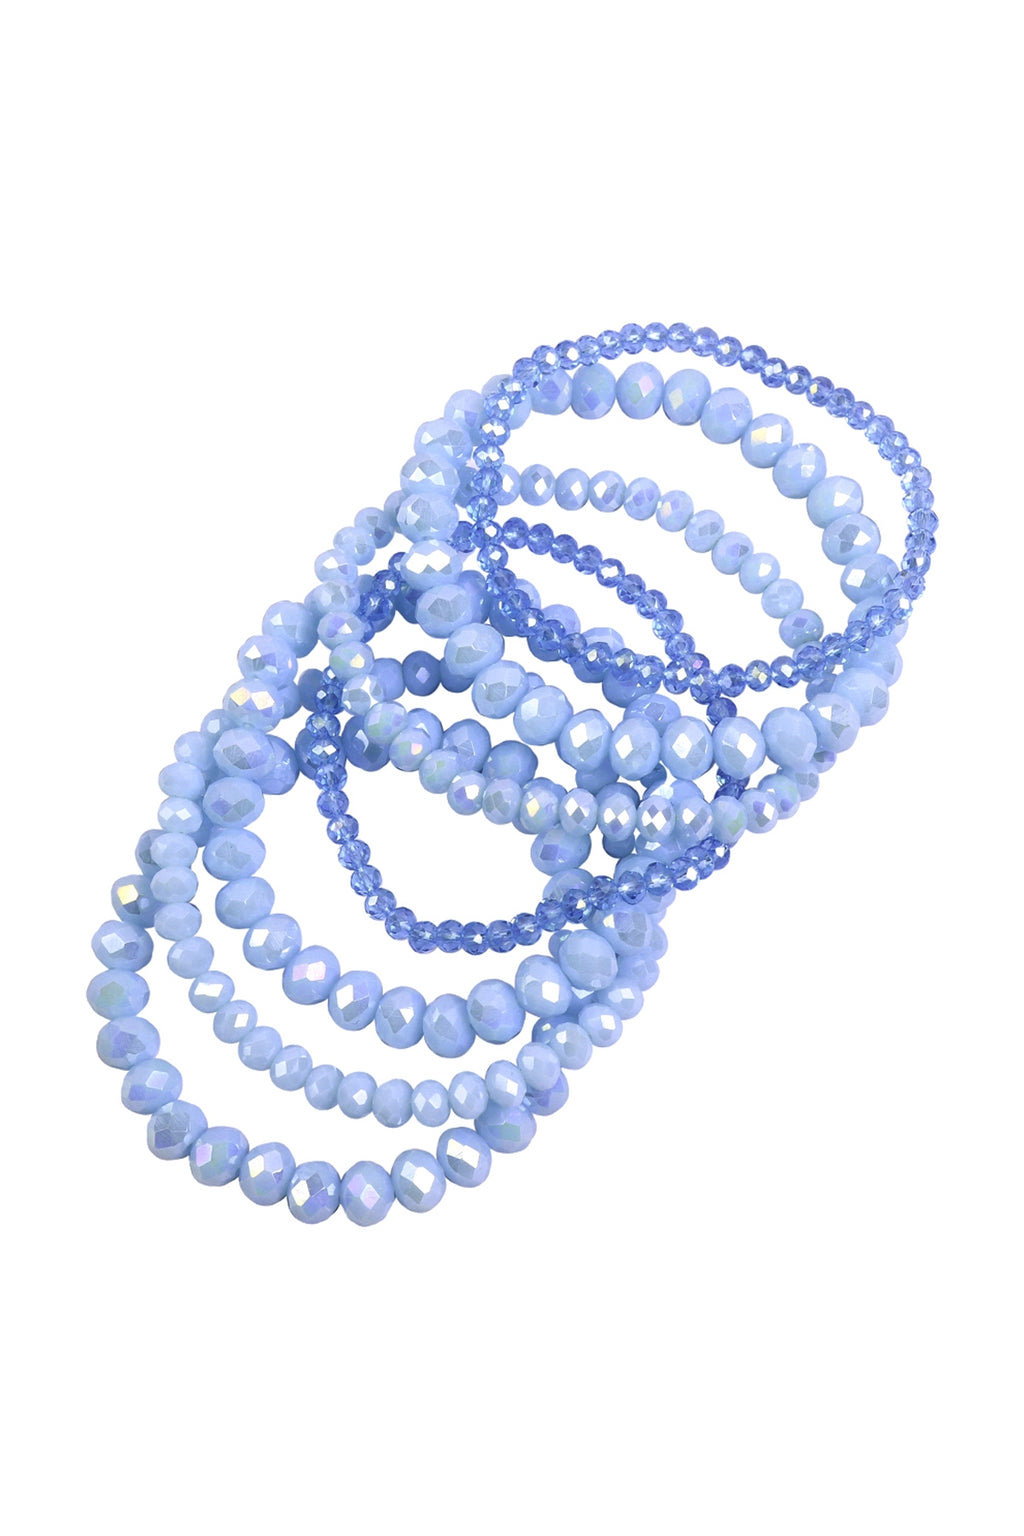 Glass Beads Stretch Bracelet Blue - Pack of 6